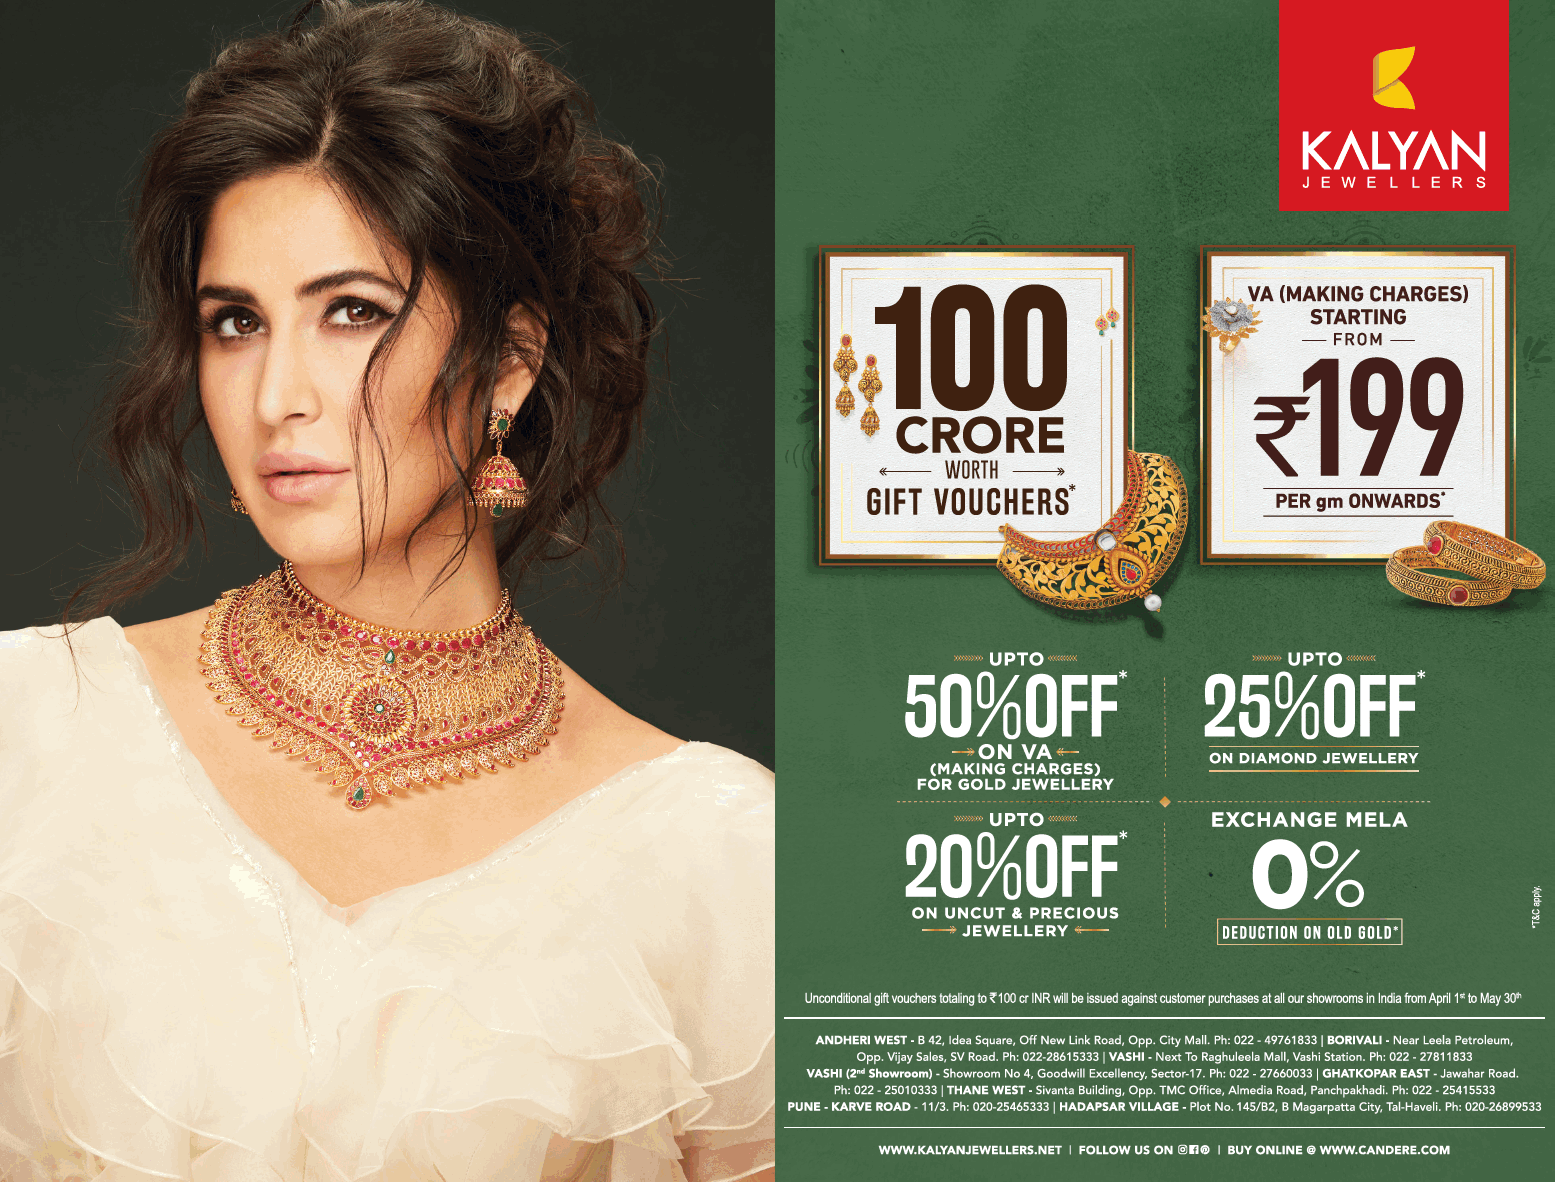 kalyan-jewellers-100-crore-worth-gift-vochers-upto-50%-off-katrina-kaif-ad-times-of-india-mumbai-30-03-2021